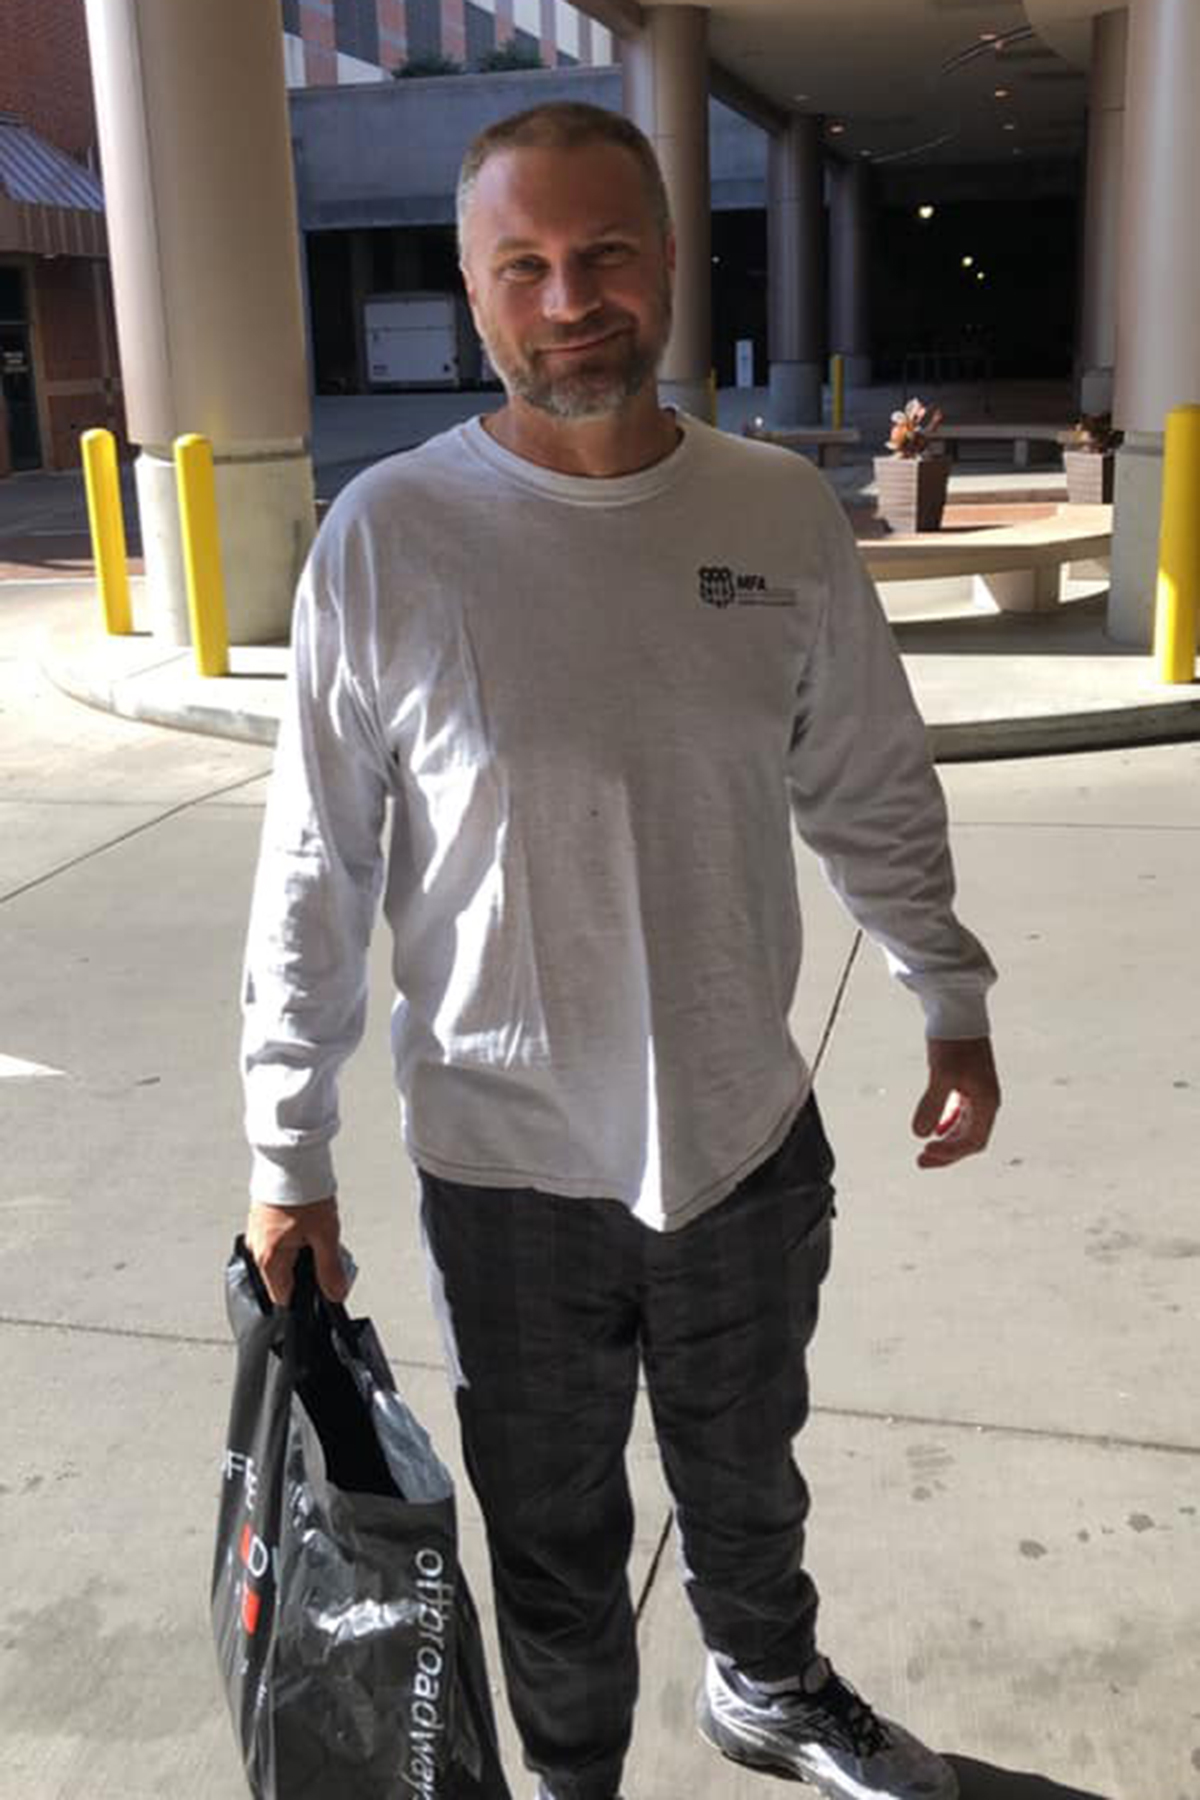 Dustin Cox leaving the hospital